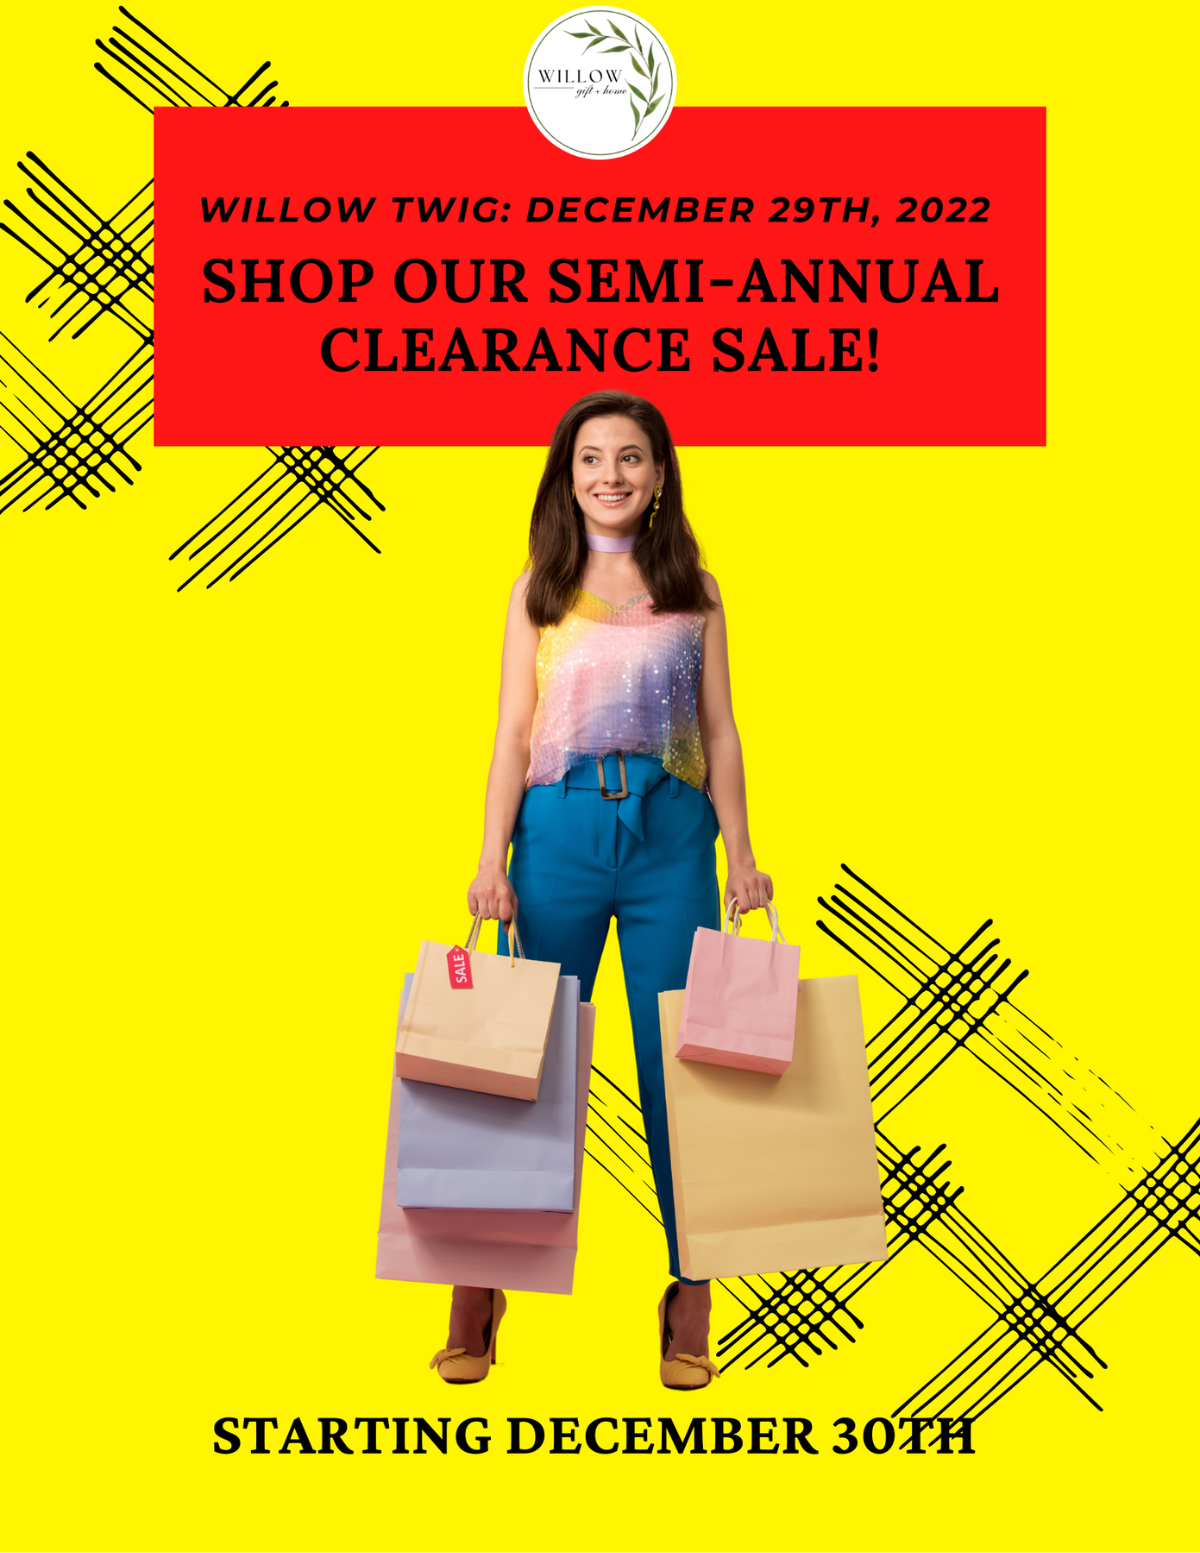 semi-annual clearance sale